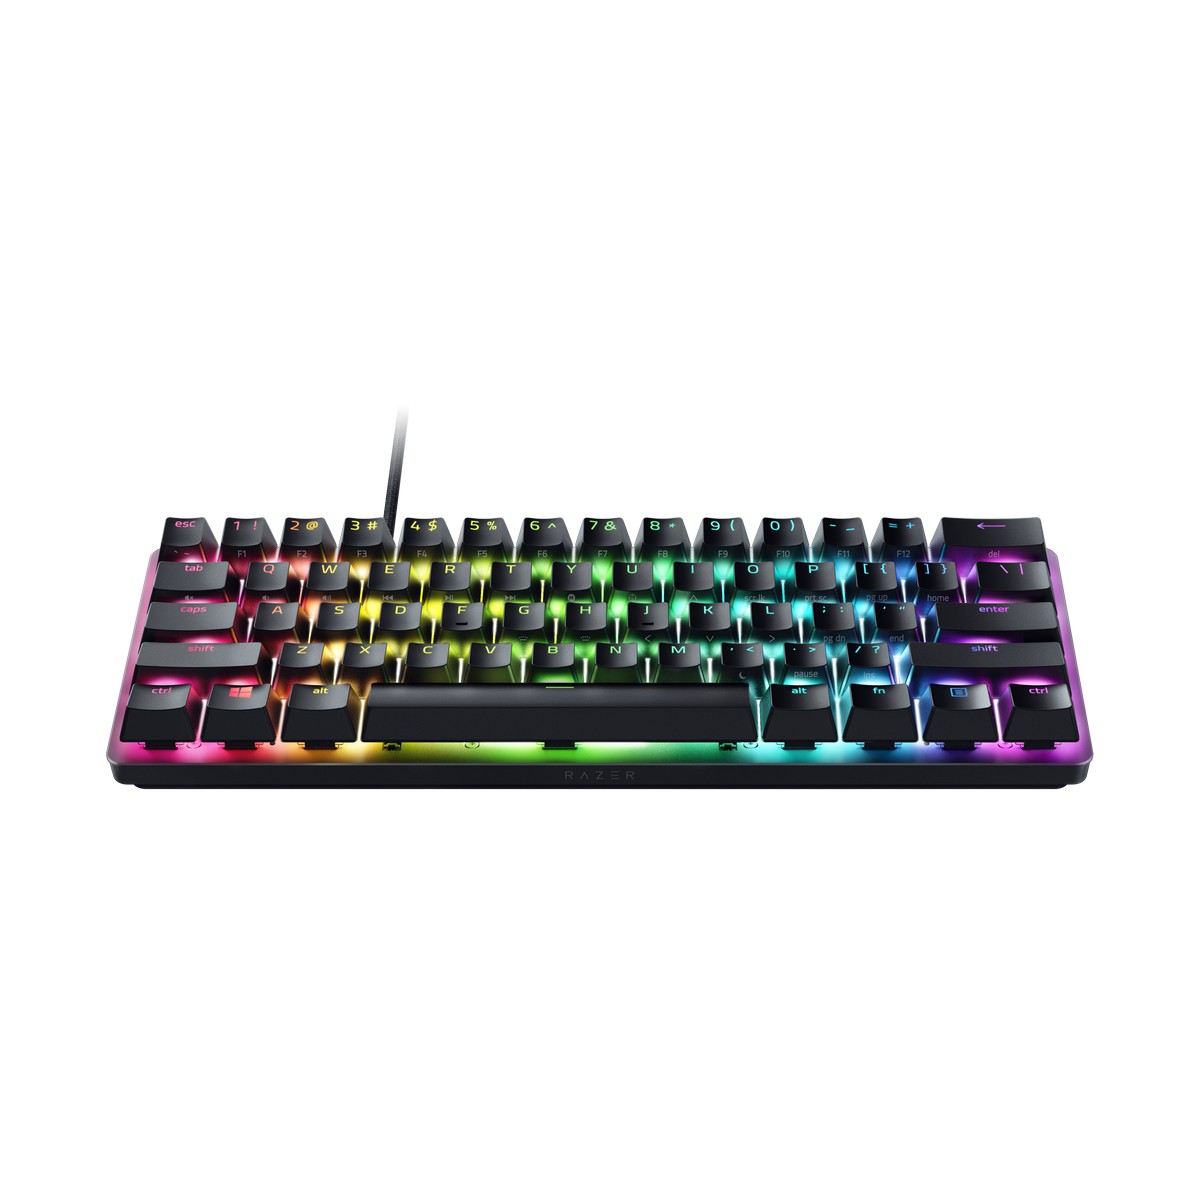 Razer Huntsman Mini Gaming Keyboard with Chroma RGB Backlighting in Black